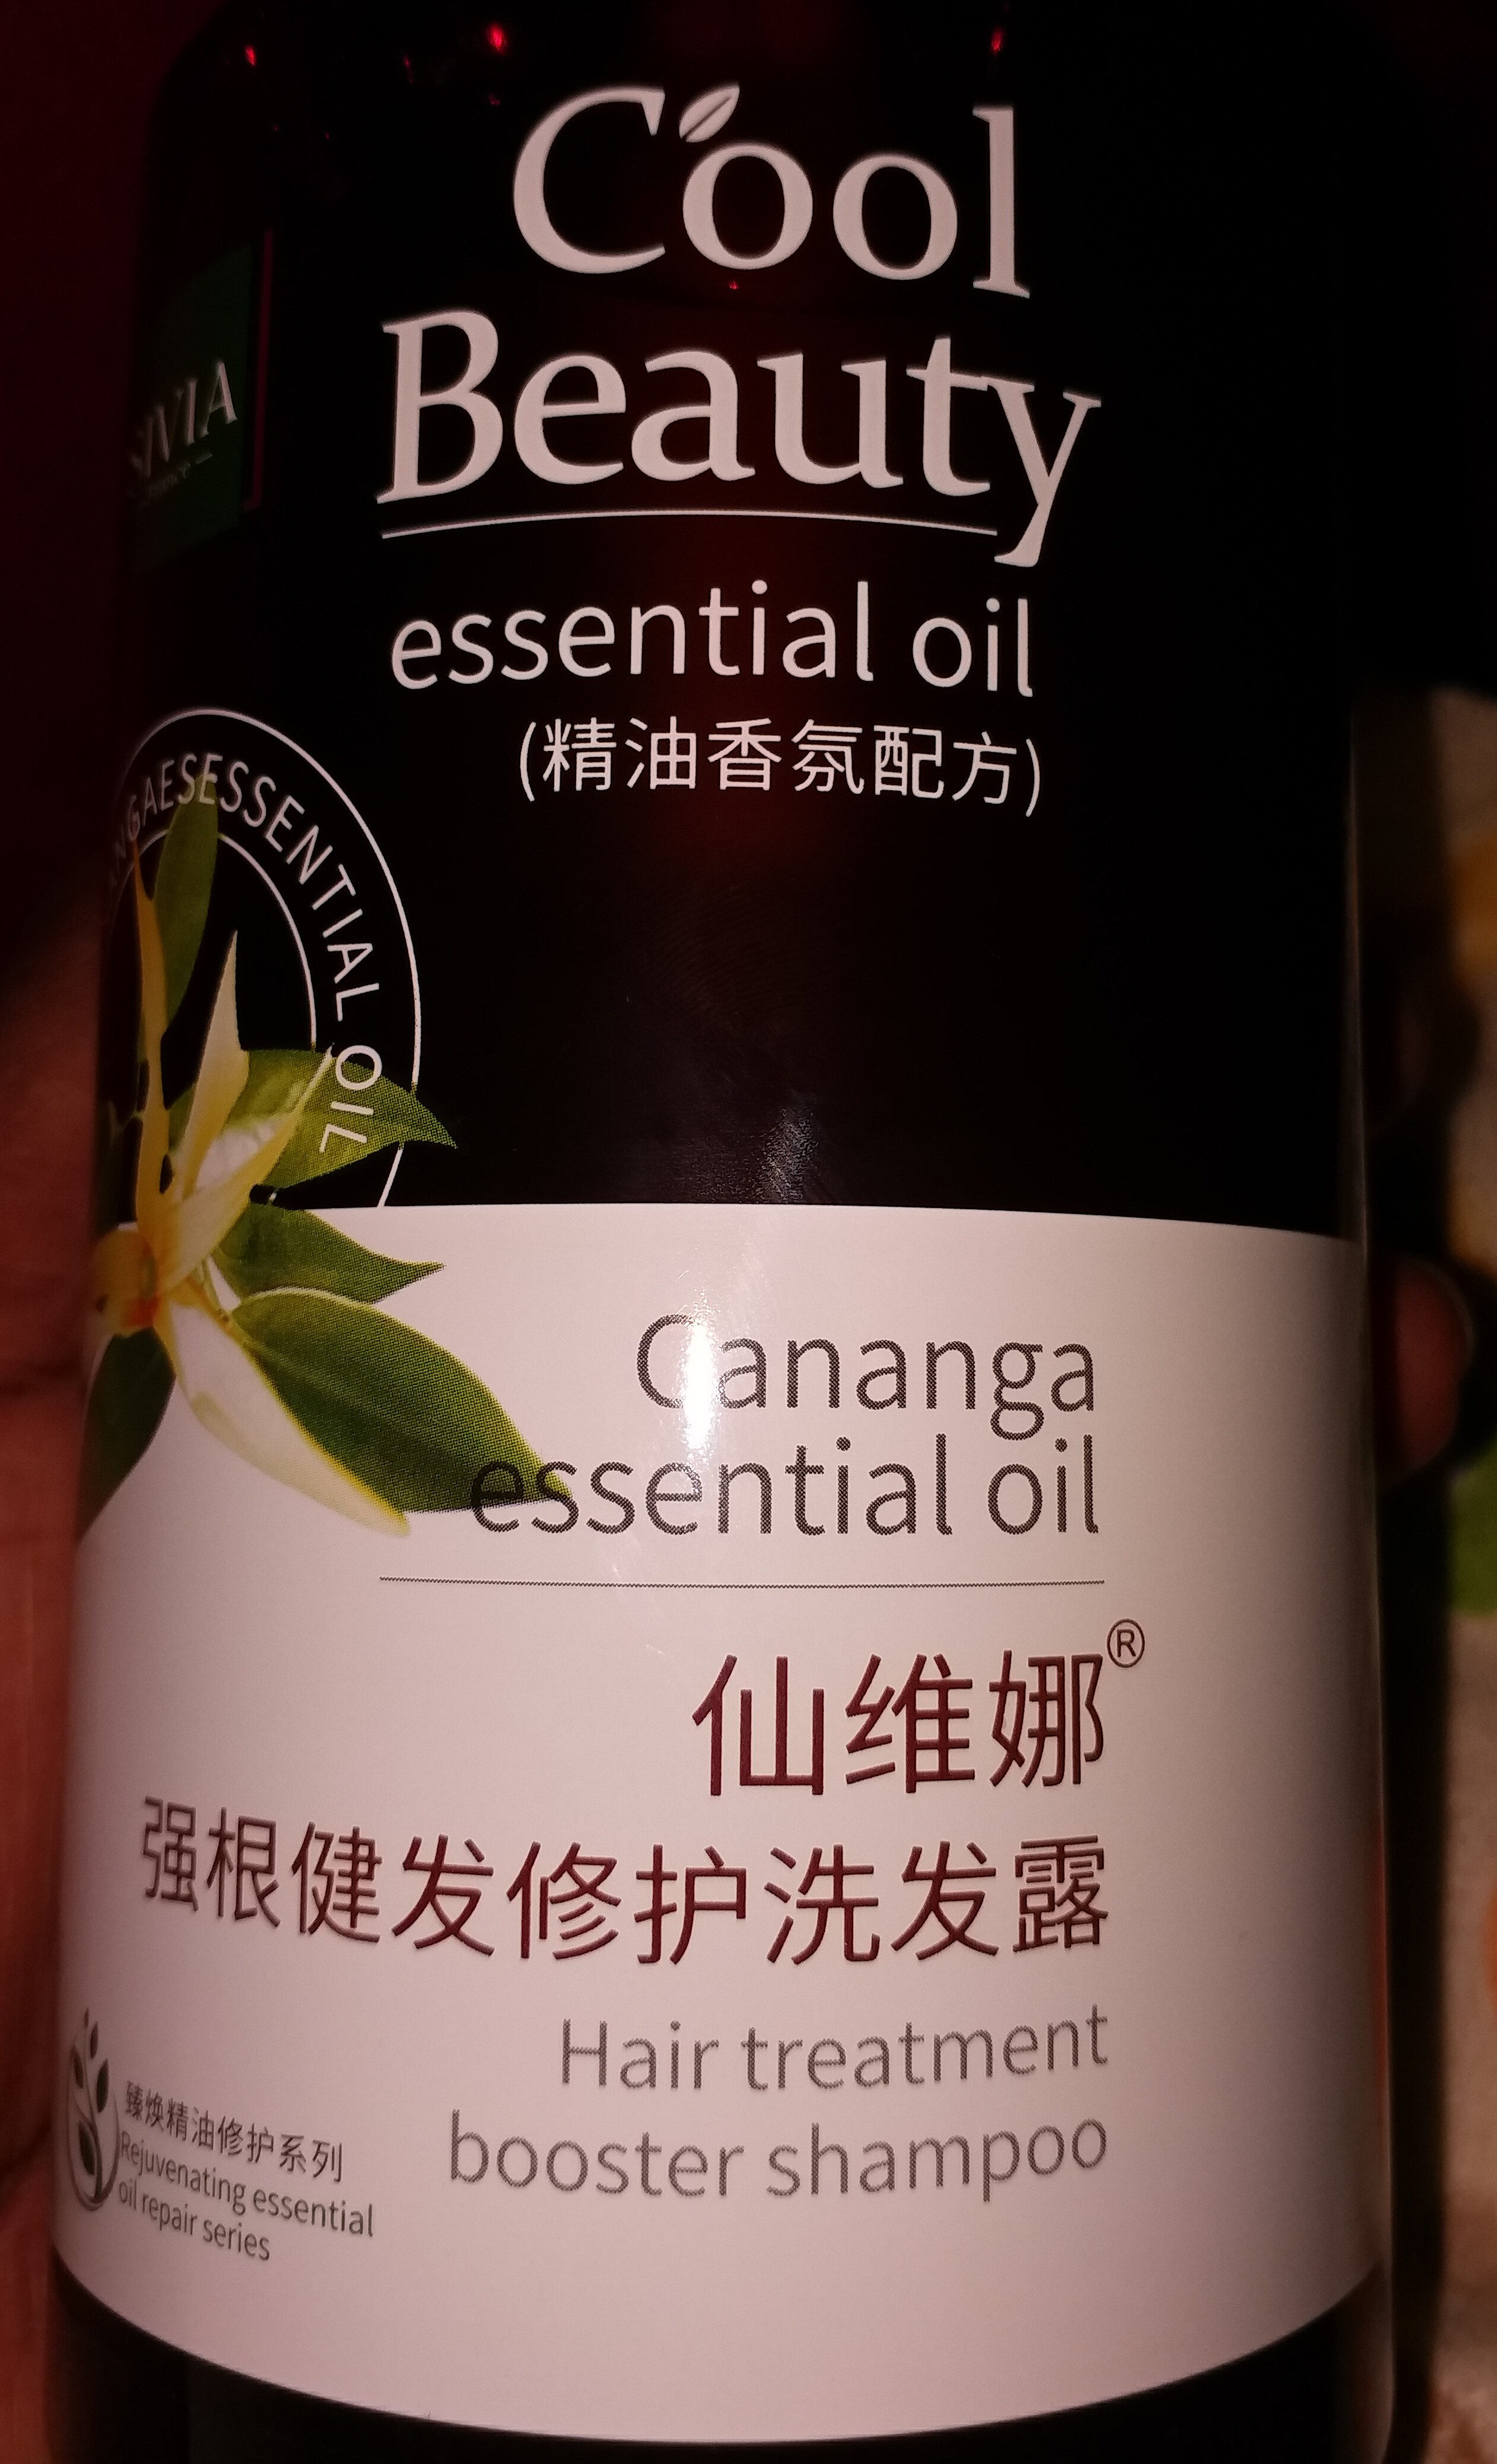 cool beauty essential oil - Produit - en